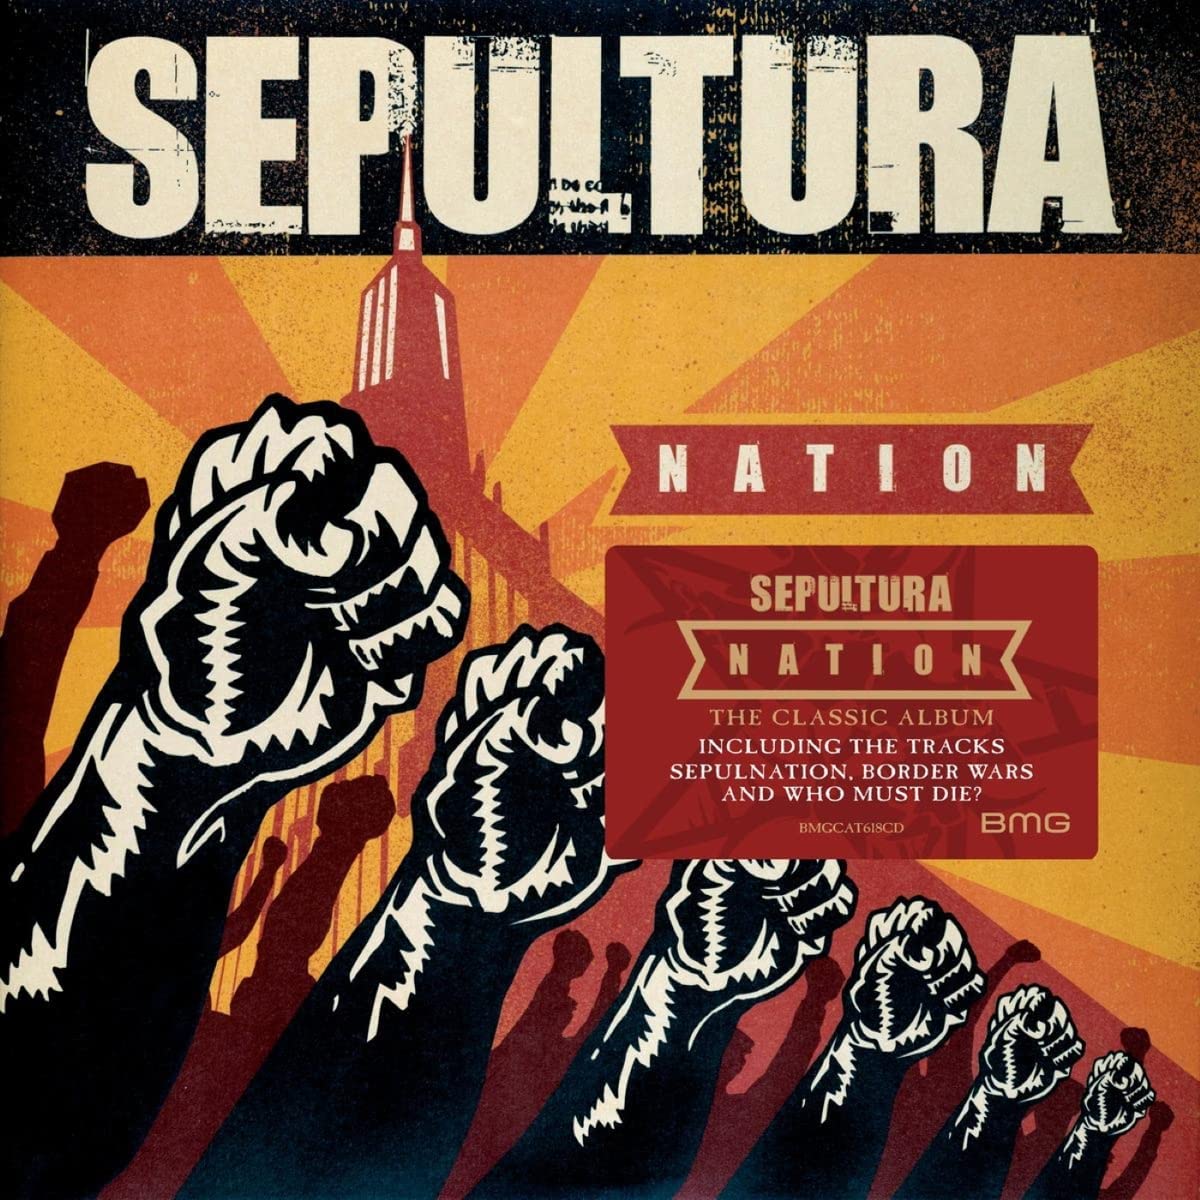 Sepultura "Nation" CD